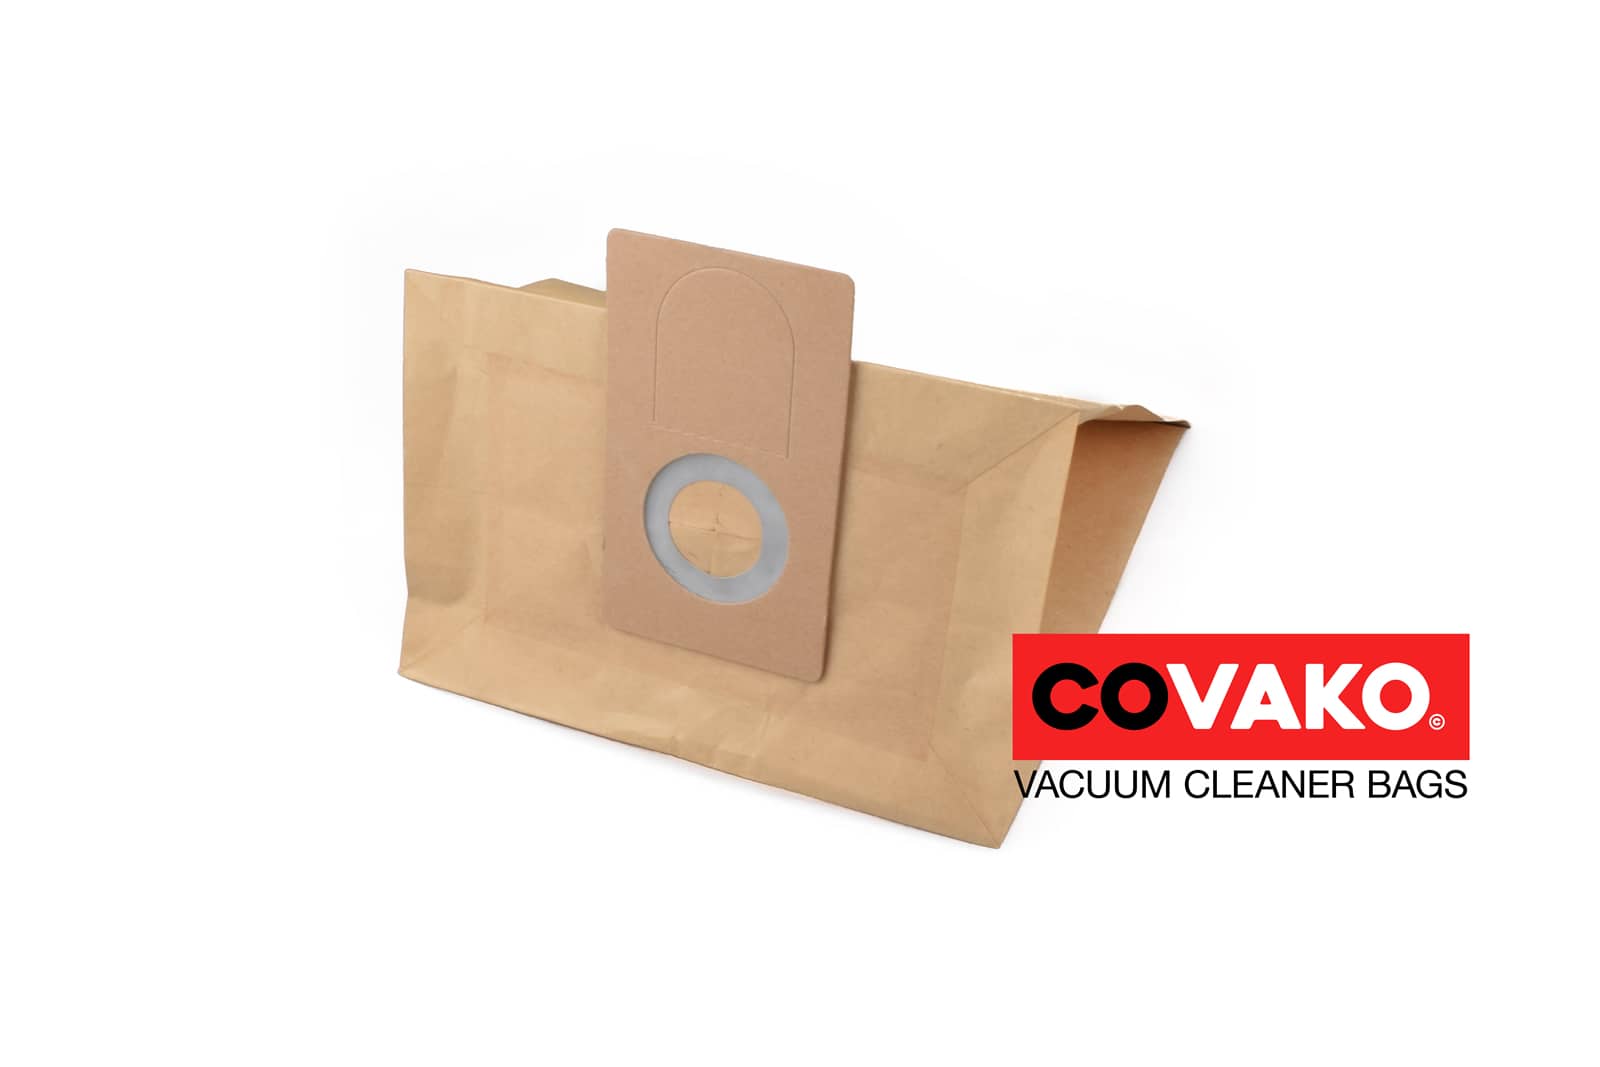 Clean a la Card S1 / Paper - Clean a la Card vacuum cleaner bags